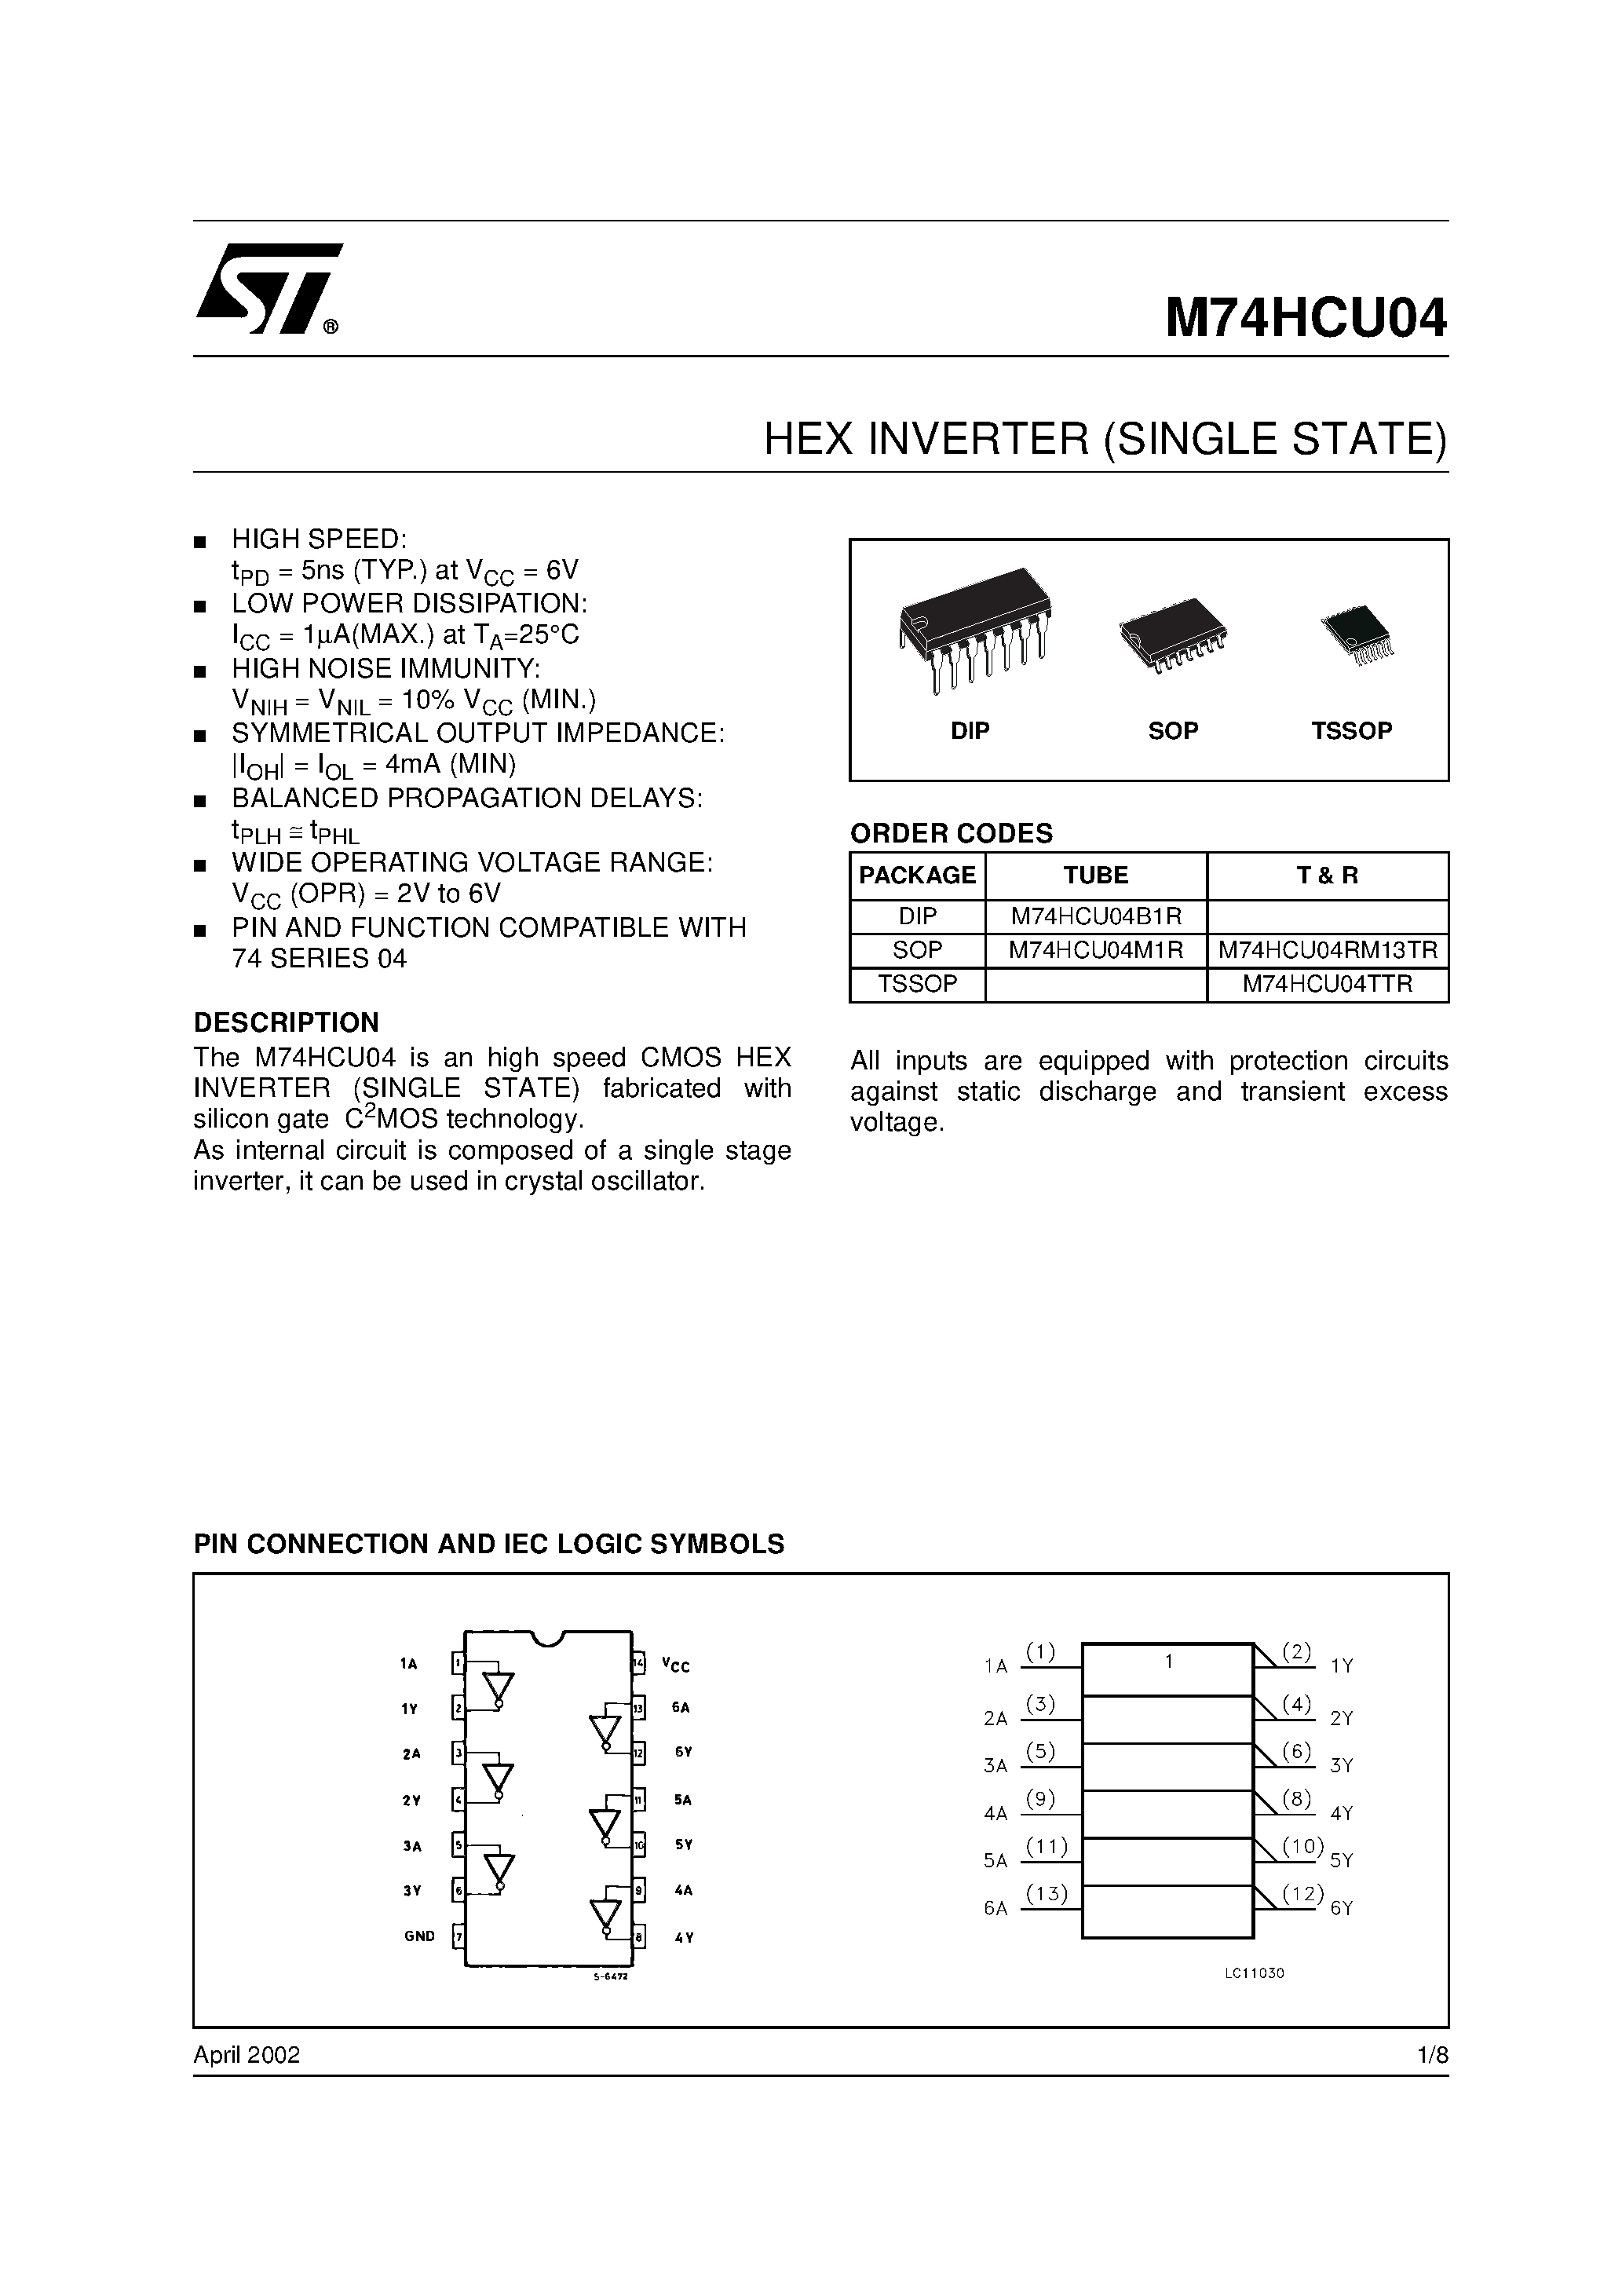 Datasheet M74HCU04 - HEX INVERTER SINGLE STATE page 1